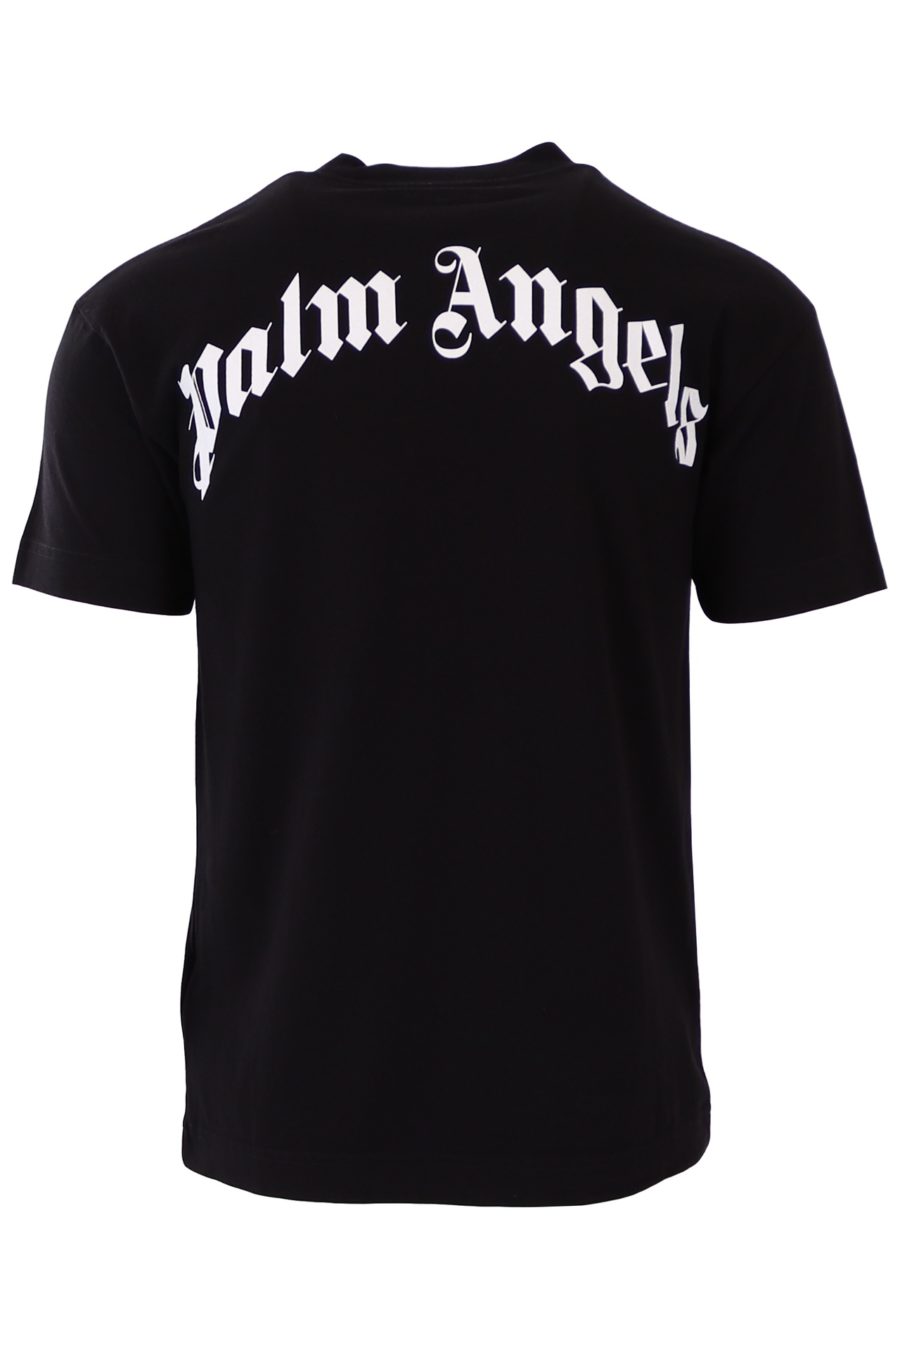 T-shirt Palm Angels noir avec ours - 2f2bc07ae57c9aad9c00b39967fcdeed9950ea56